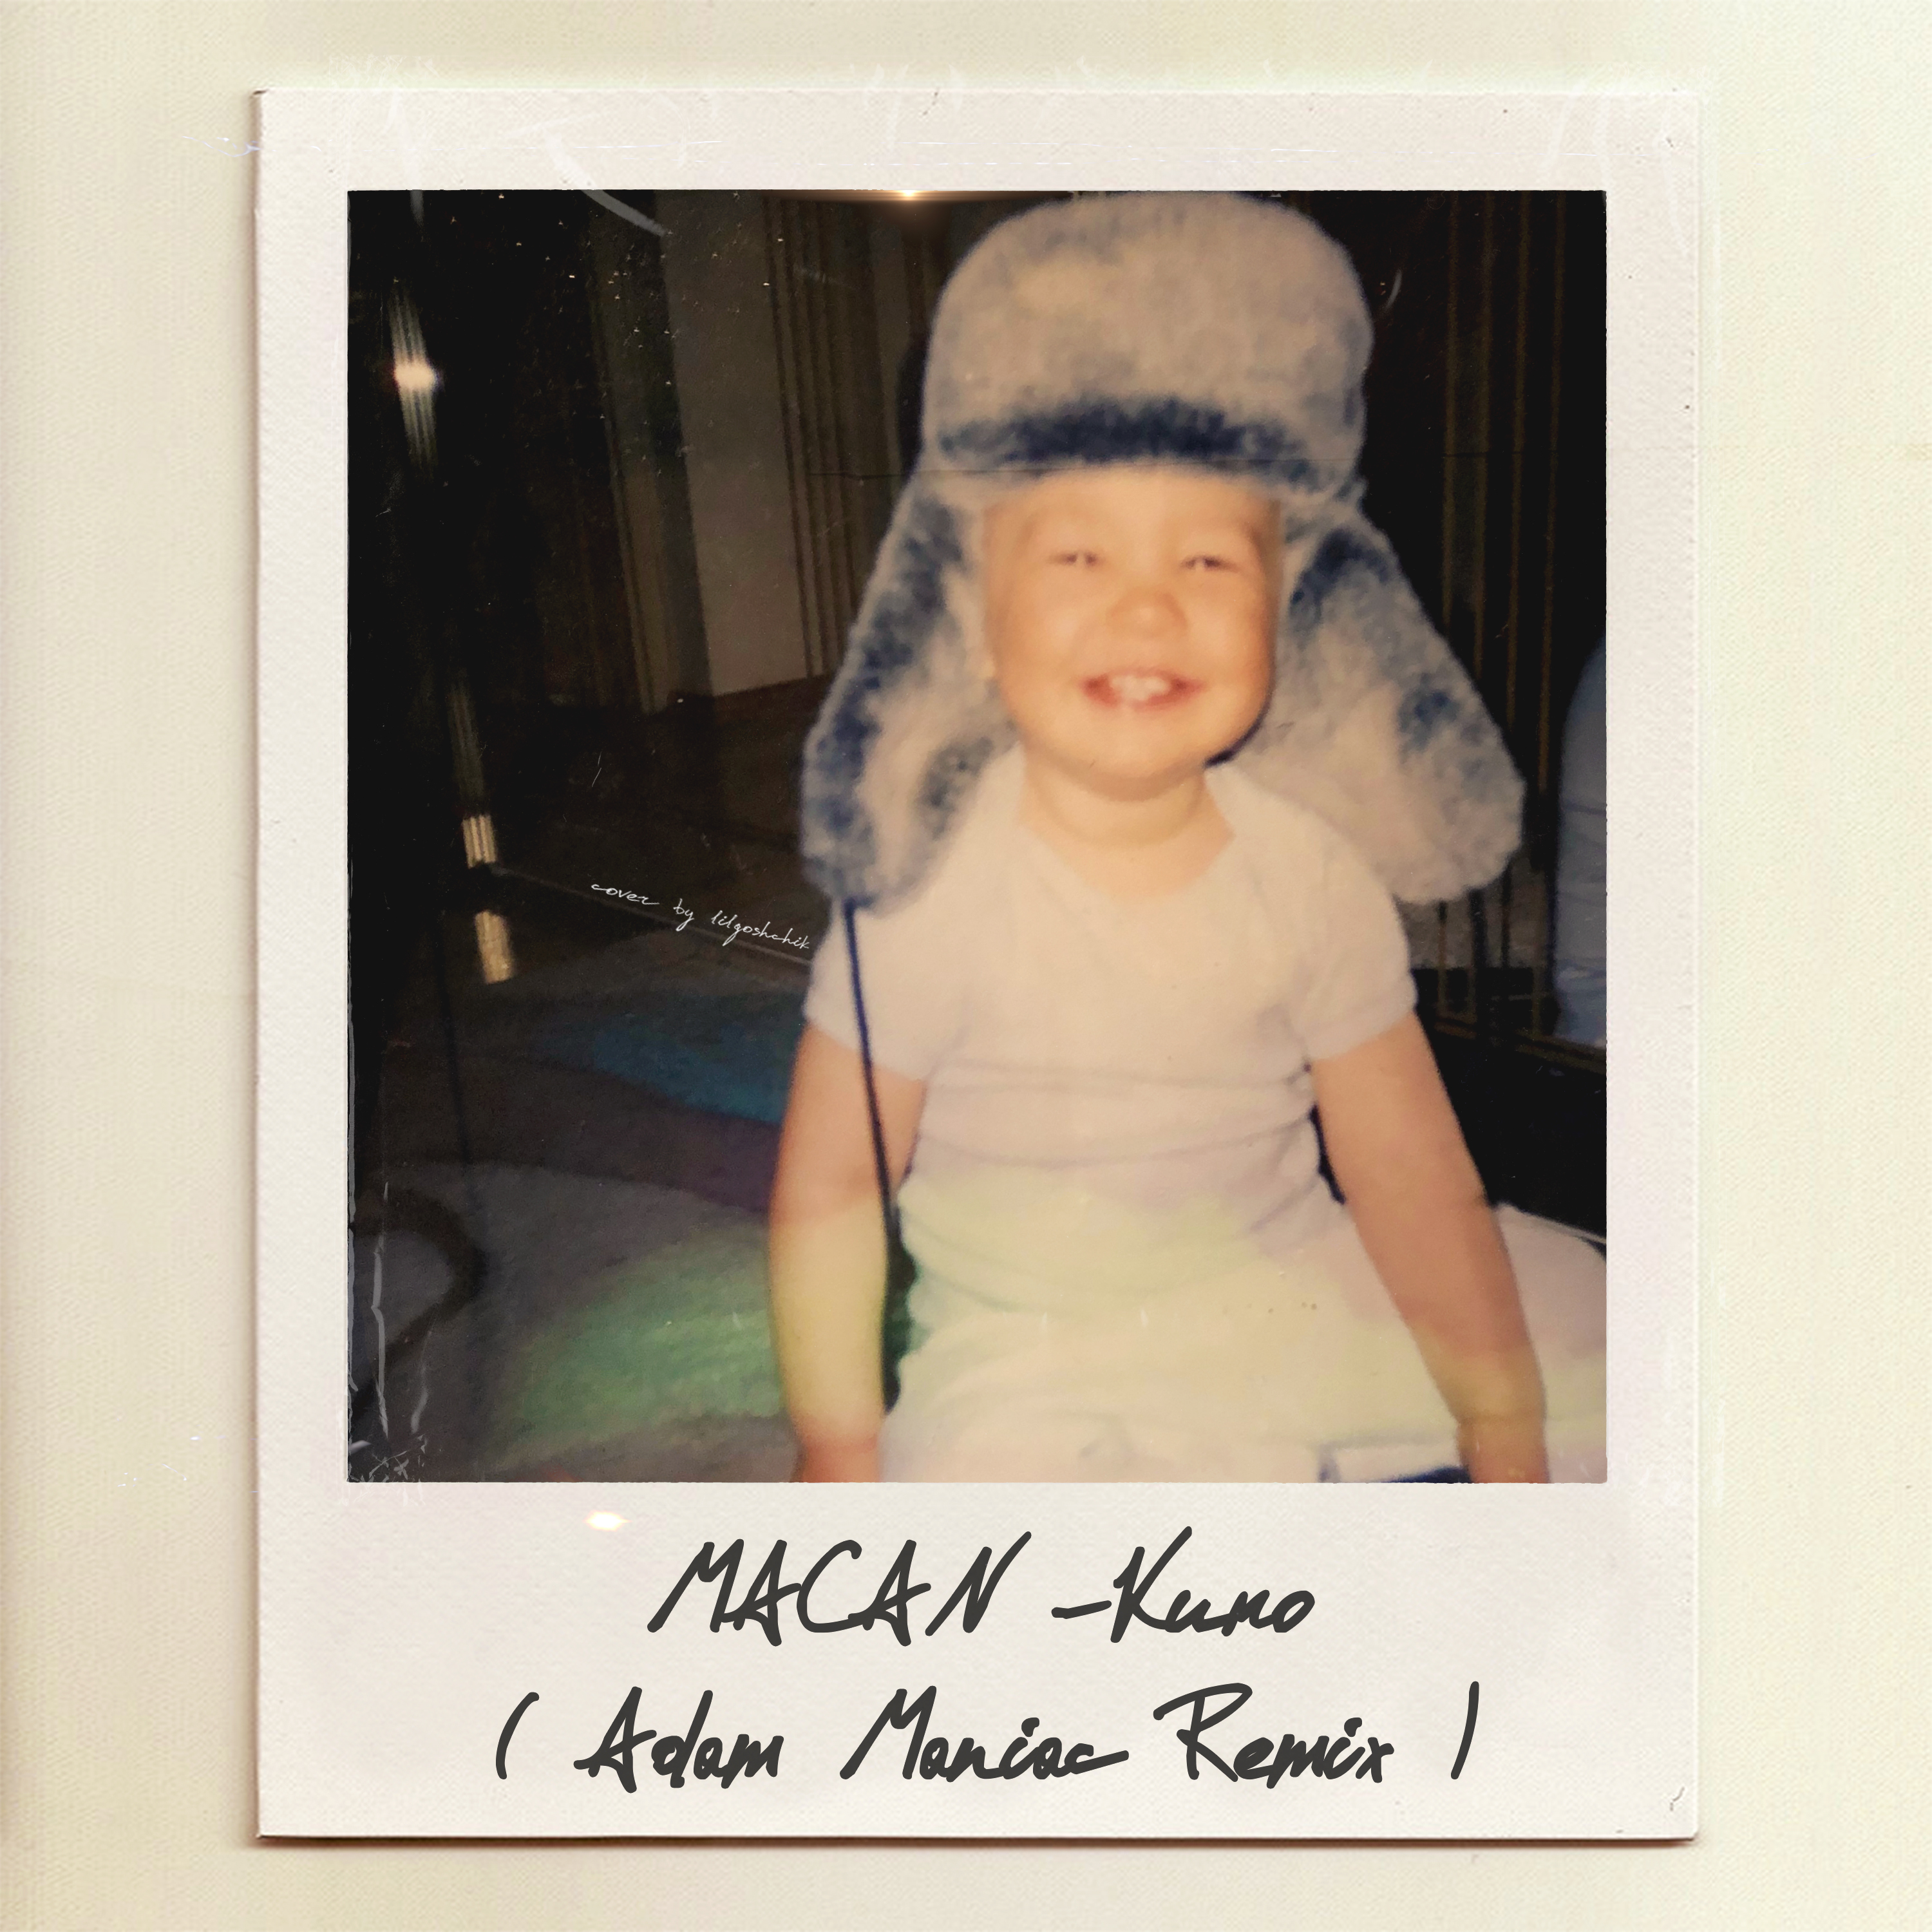 Download Macan - Кино (Adam Maniac remix)